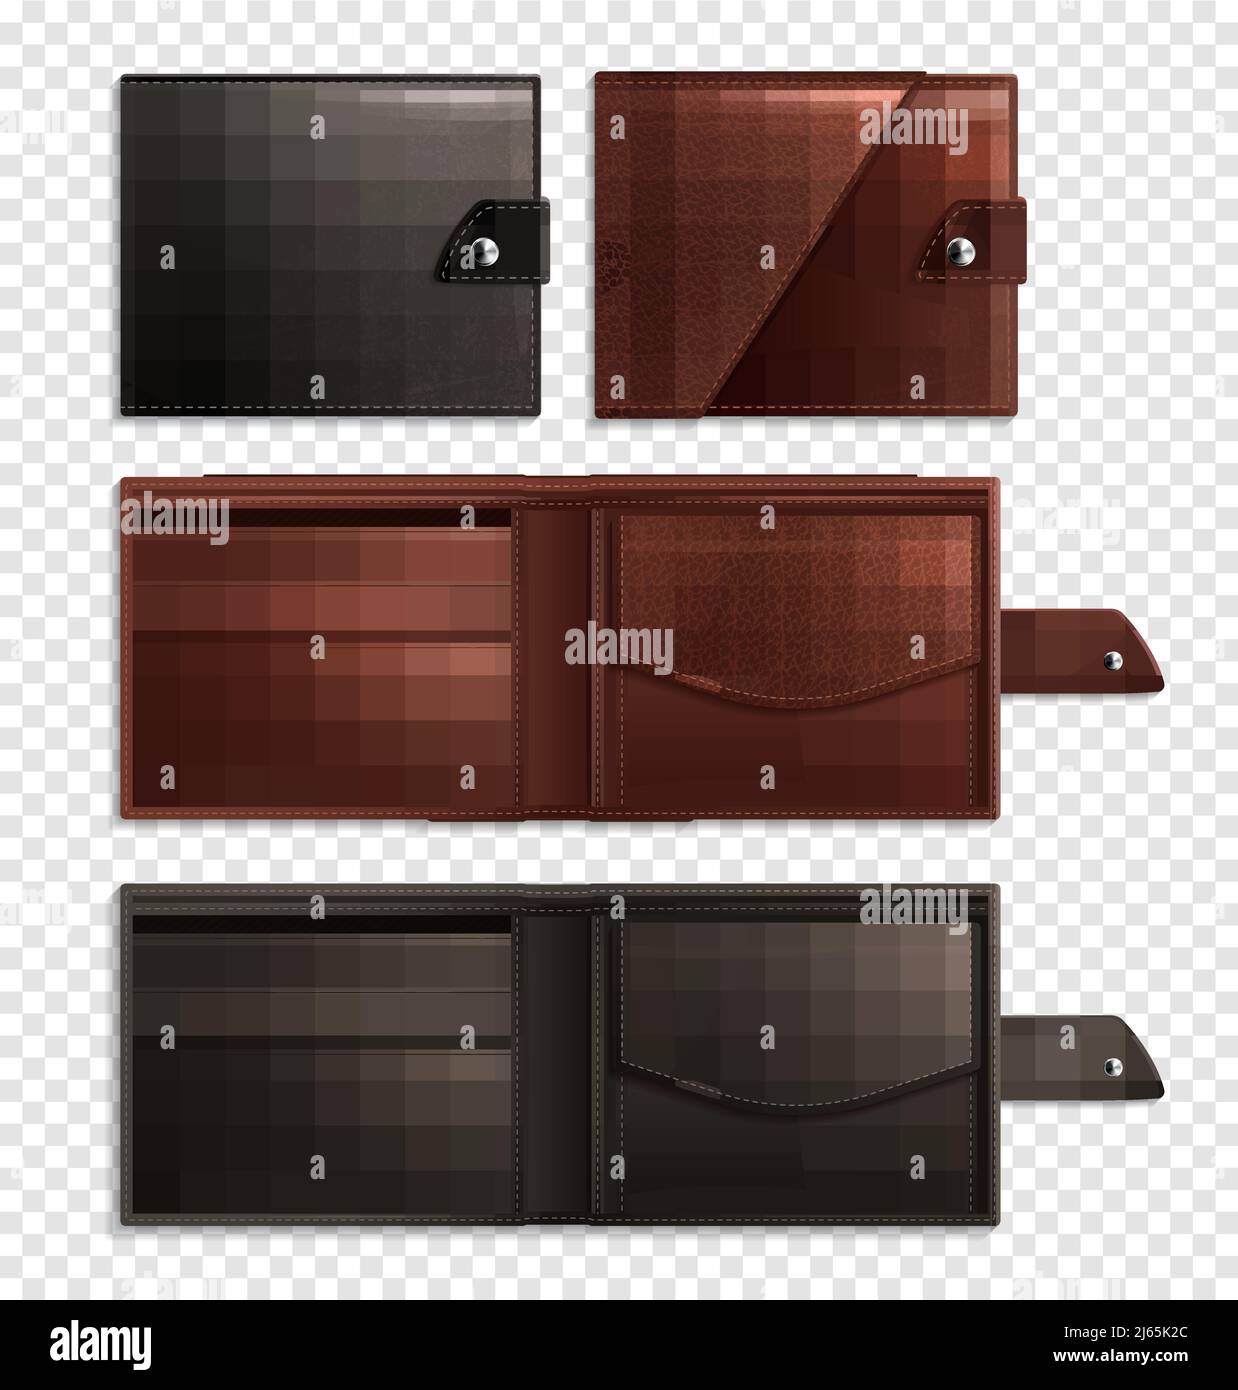 leather, balck icon, Leather Folder icon sets